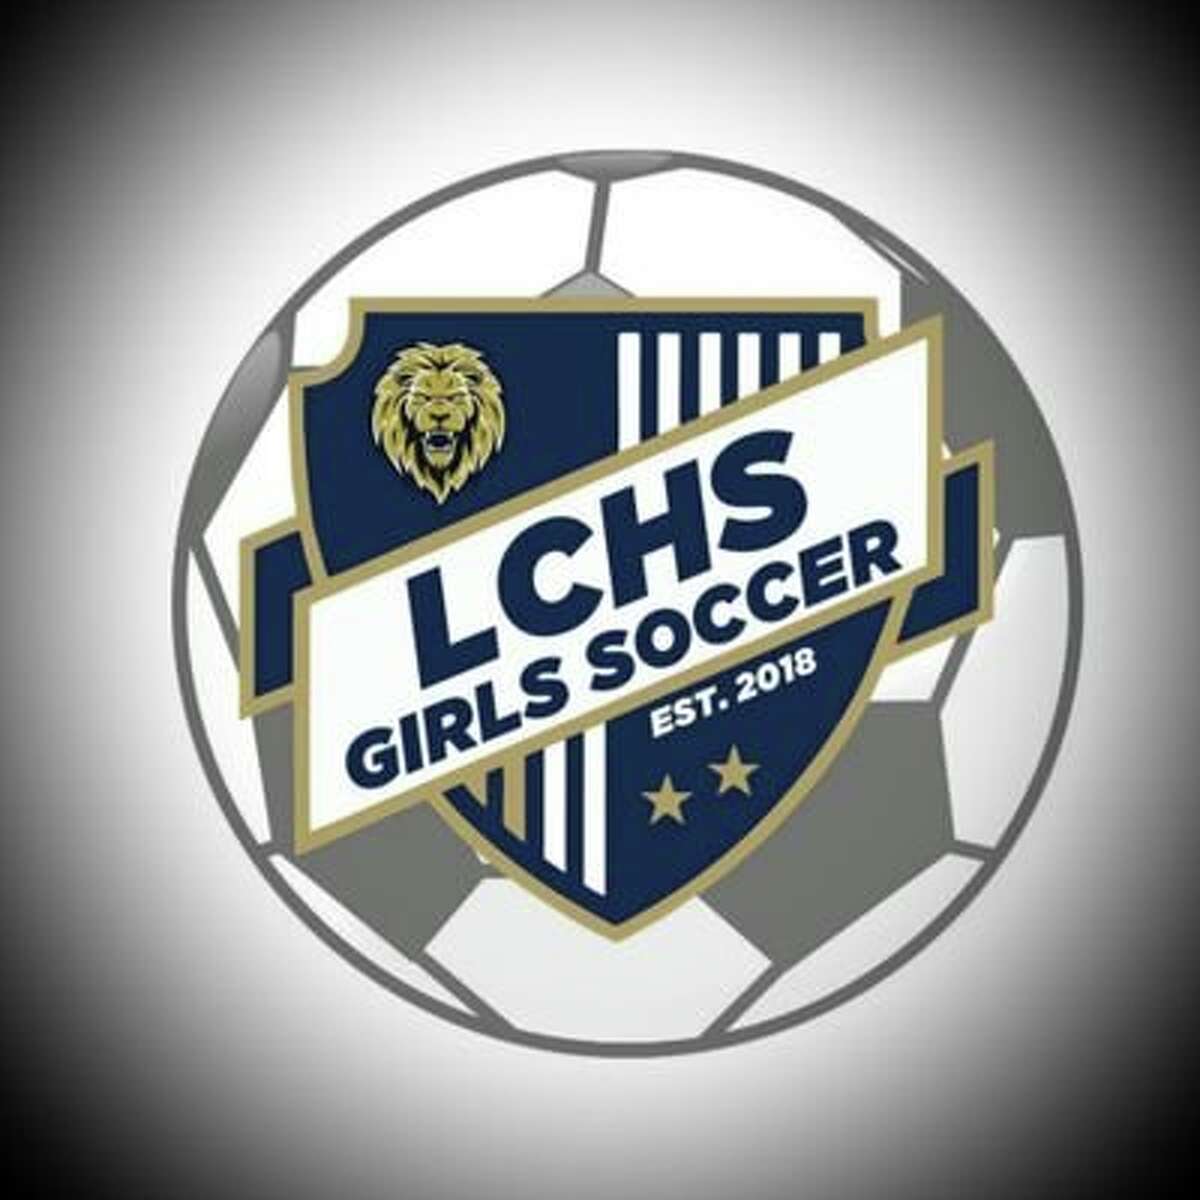 Lake Creek soccer logo.